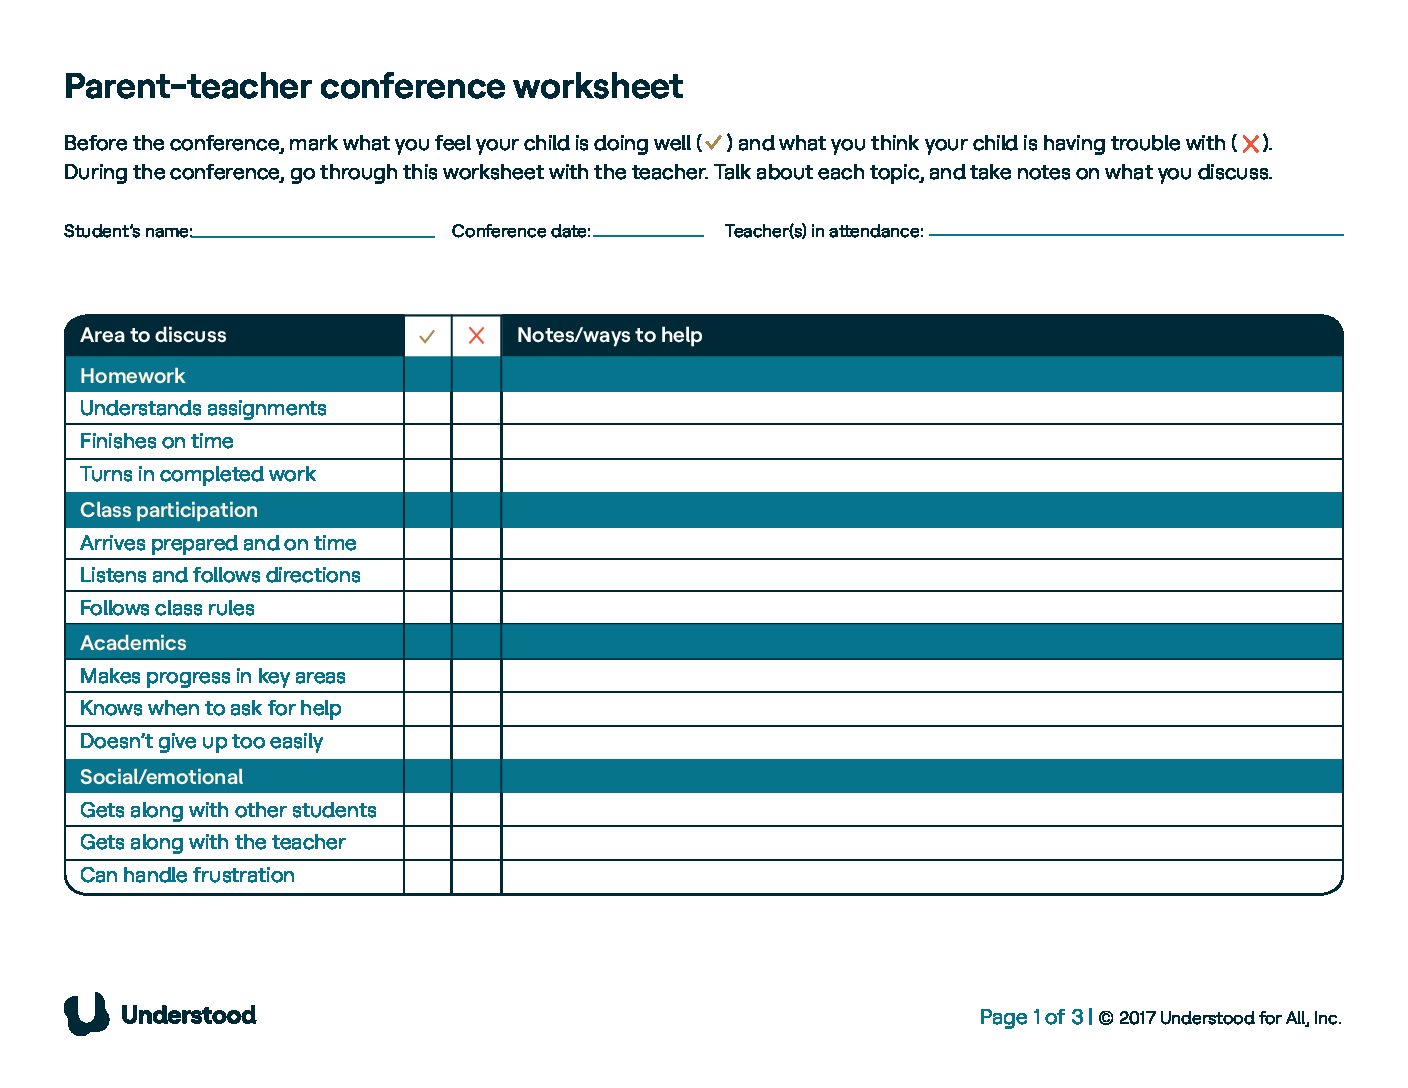 Teacher_Conference_Worksheet_Understood الوالدين